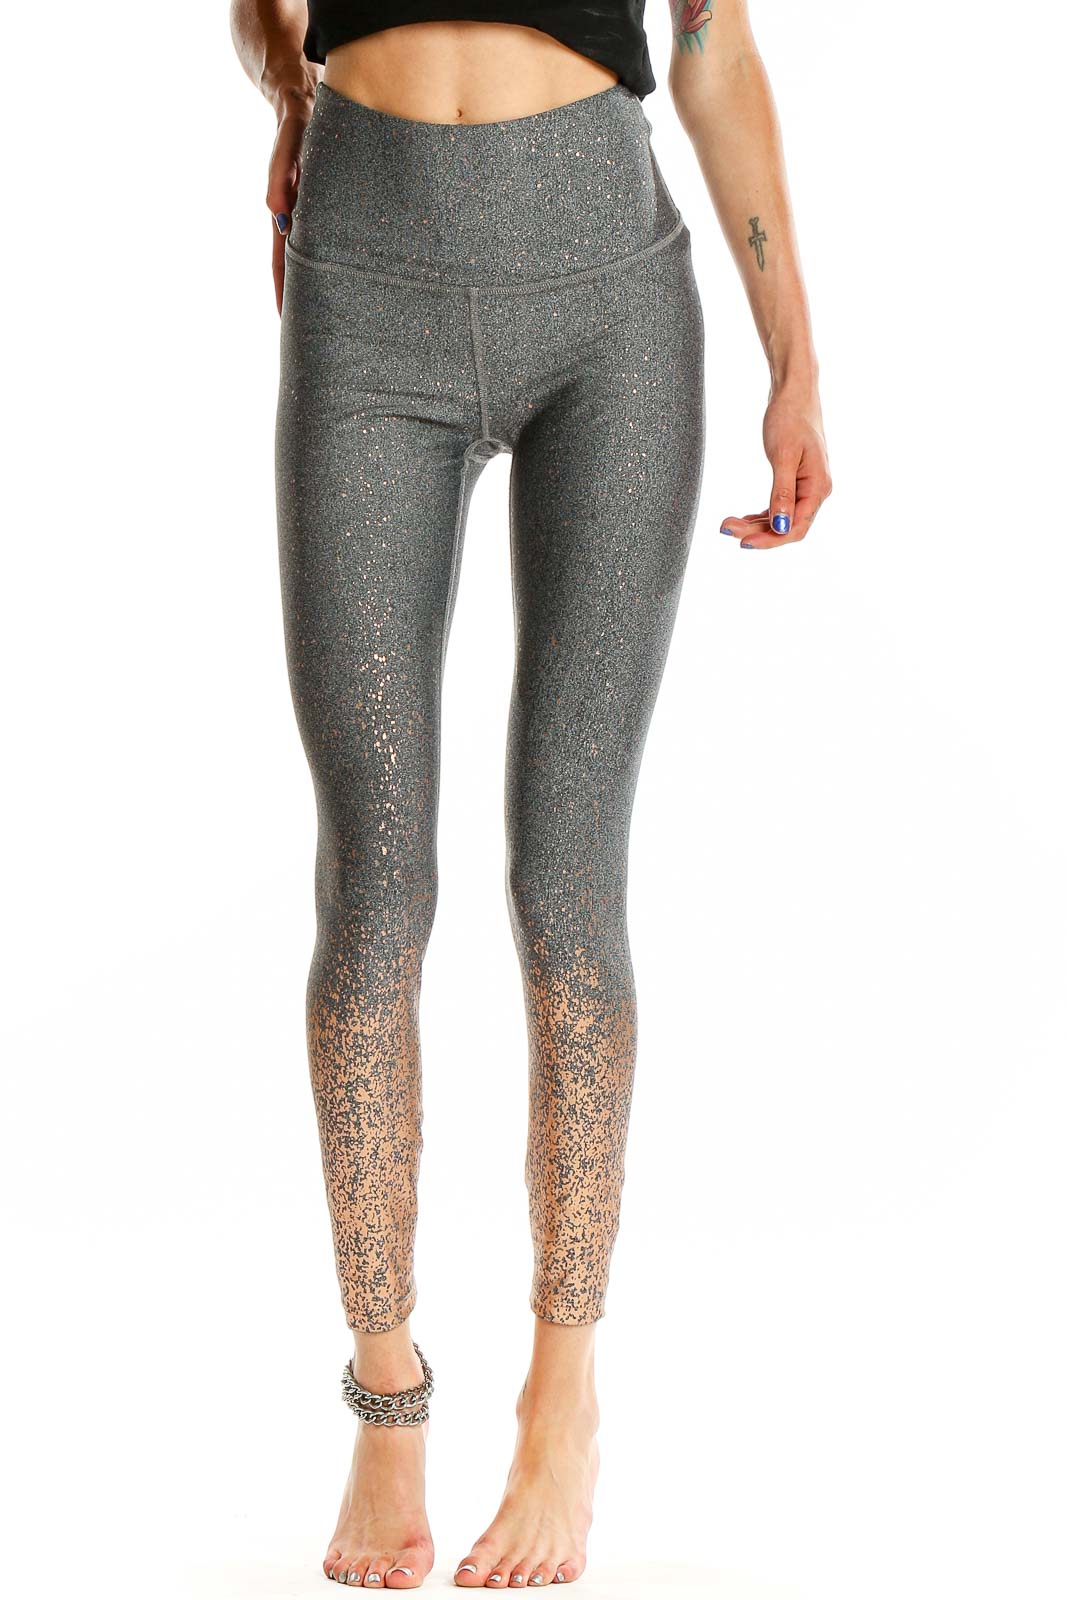 Beyond Yoga - Gray Shimmer Activewear Leggings Polyester Spandex Nylon